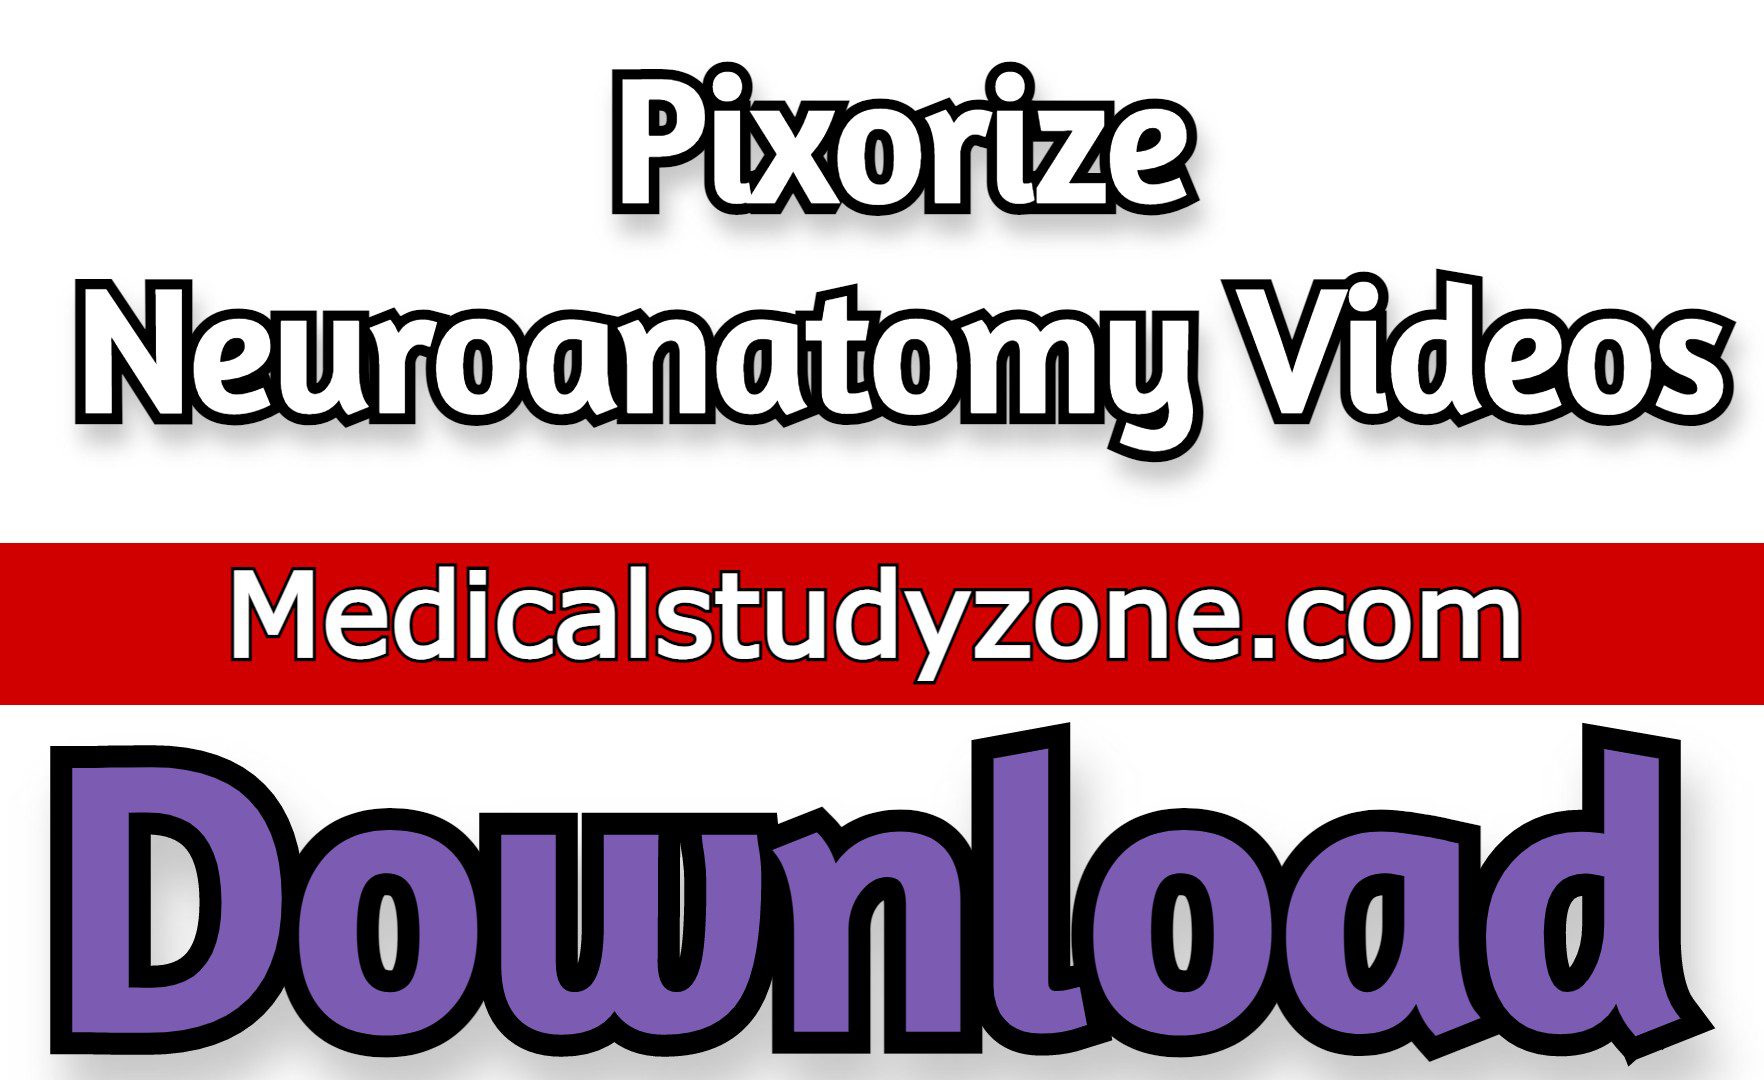 Pixorize Neuroanatomy 2022 Videos Free Download